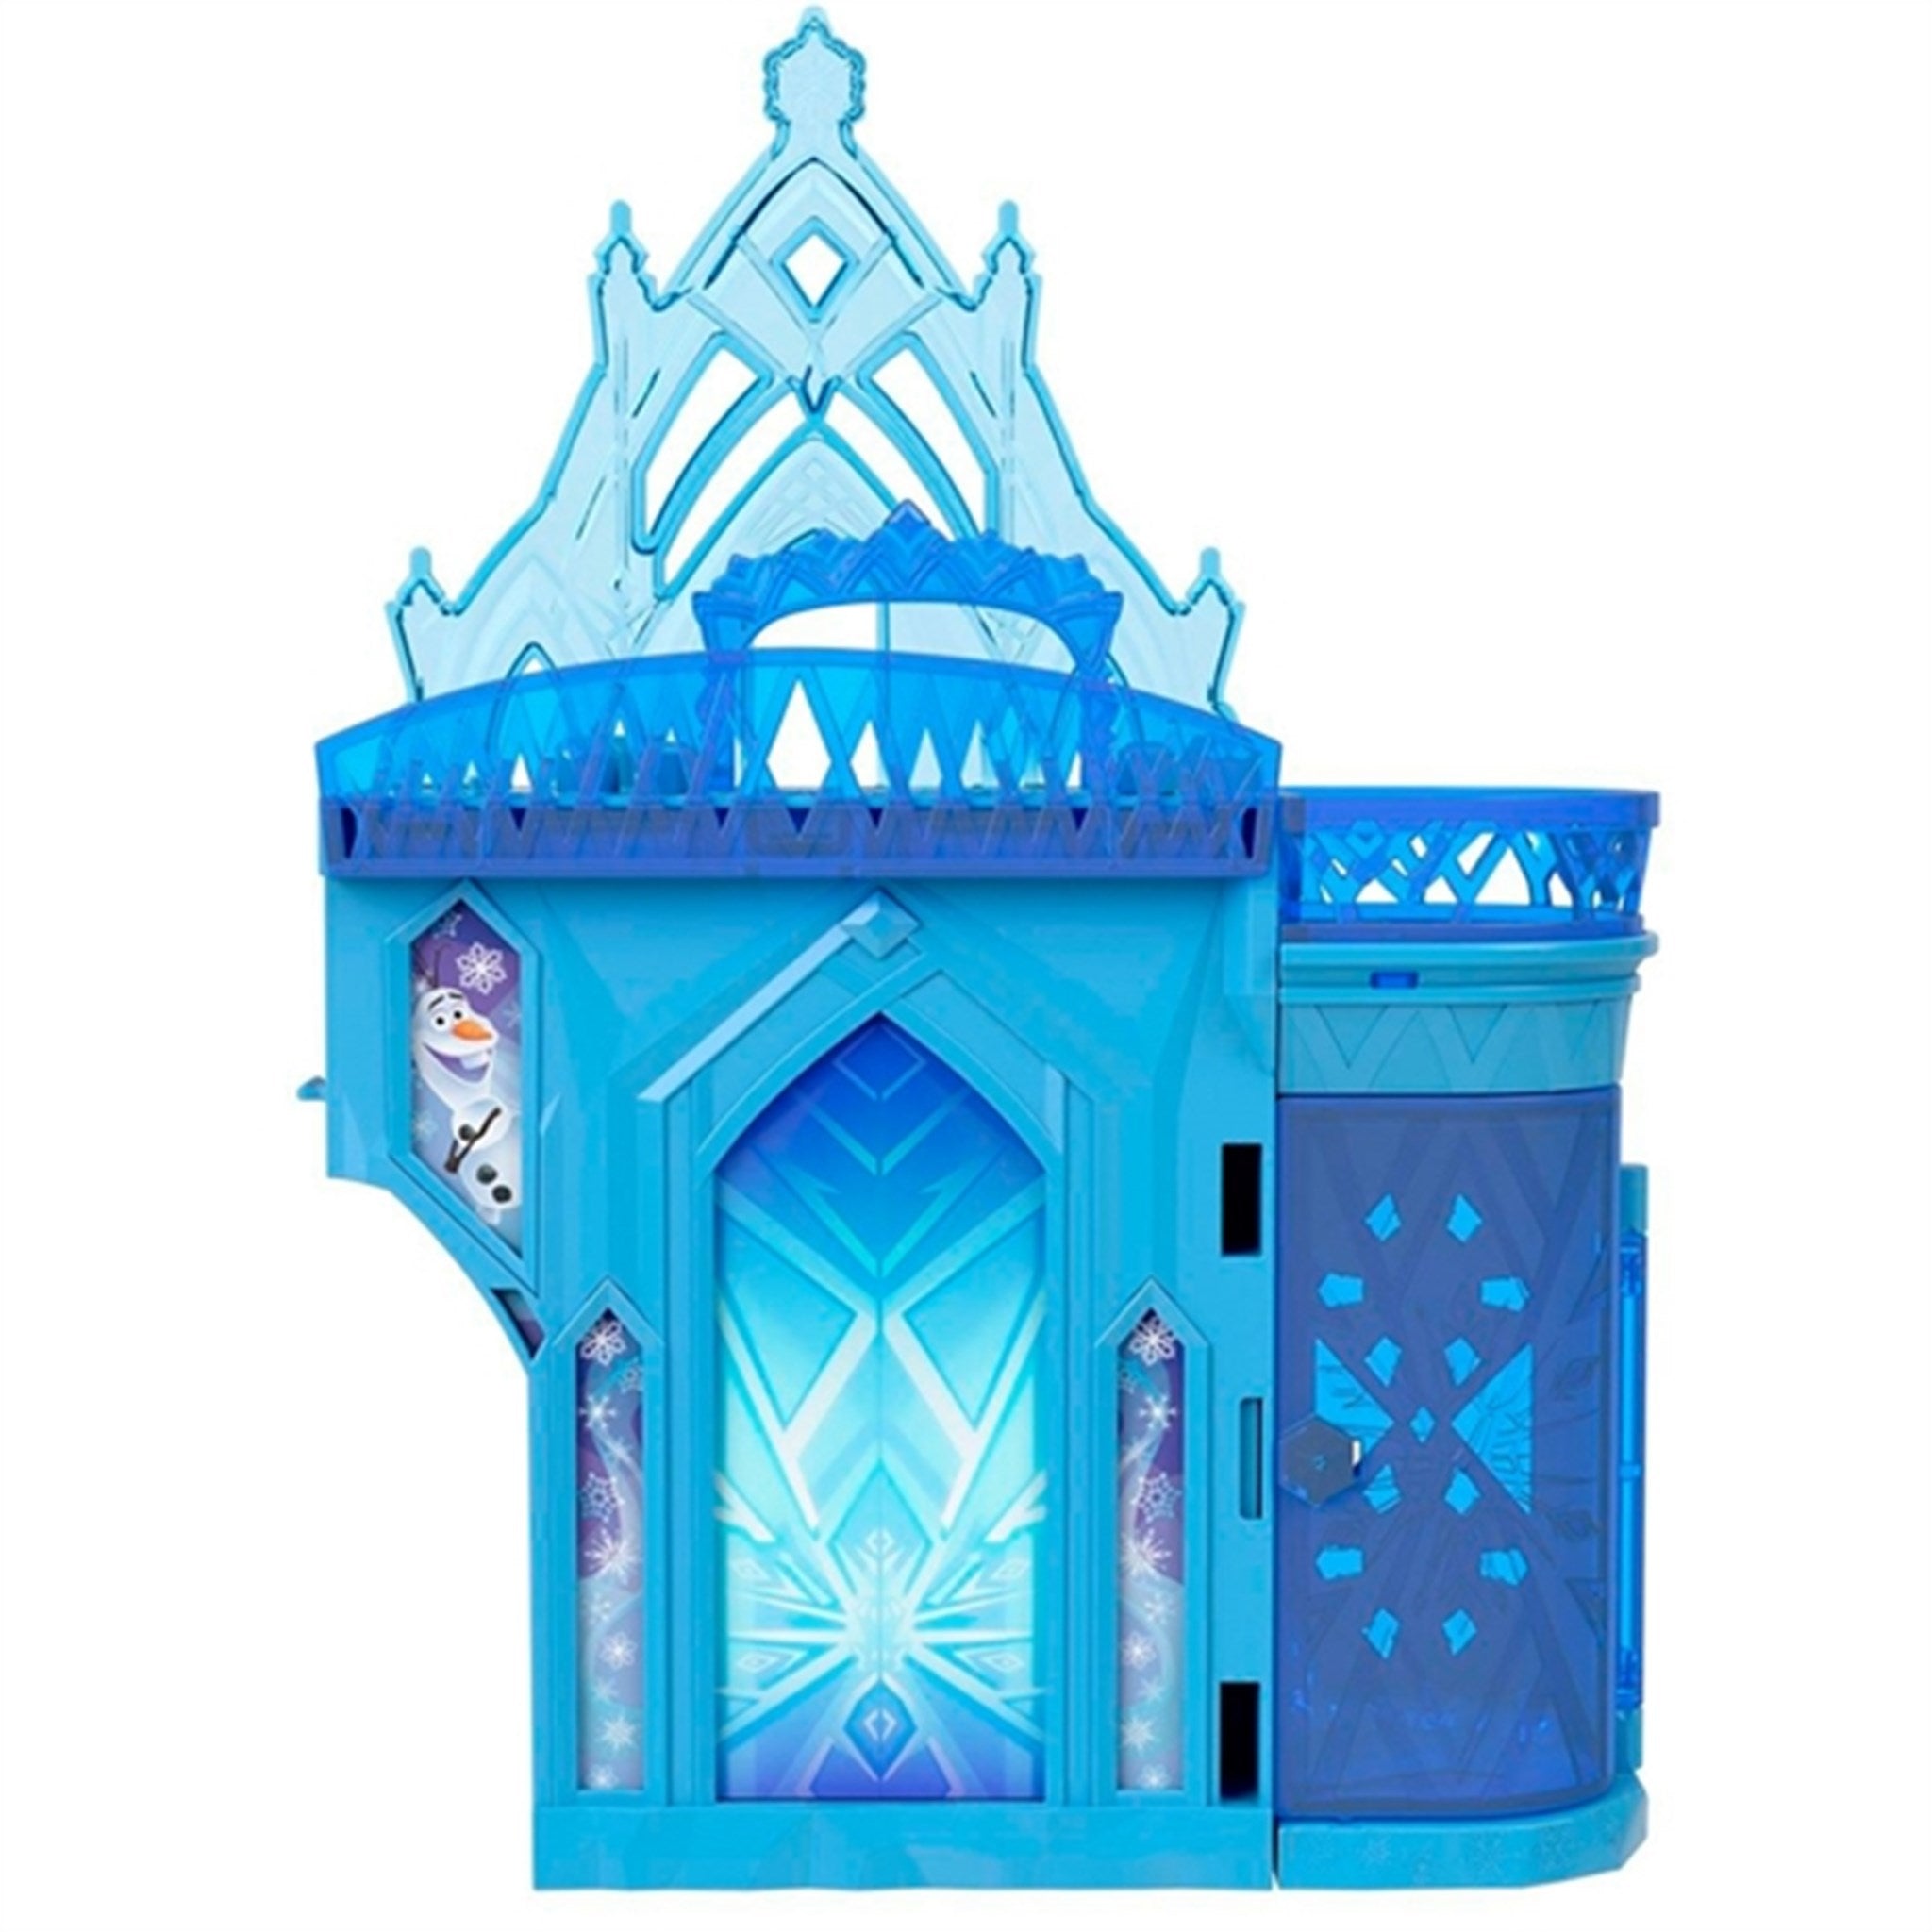 Disney Frozen Elsa's Ice Castle Playset 14